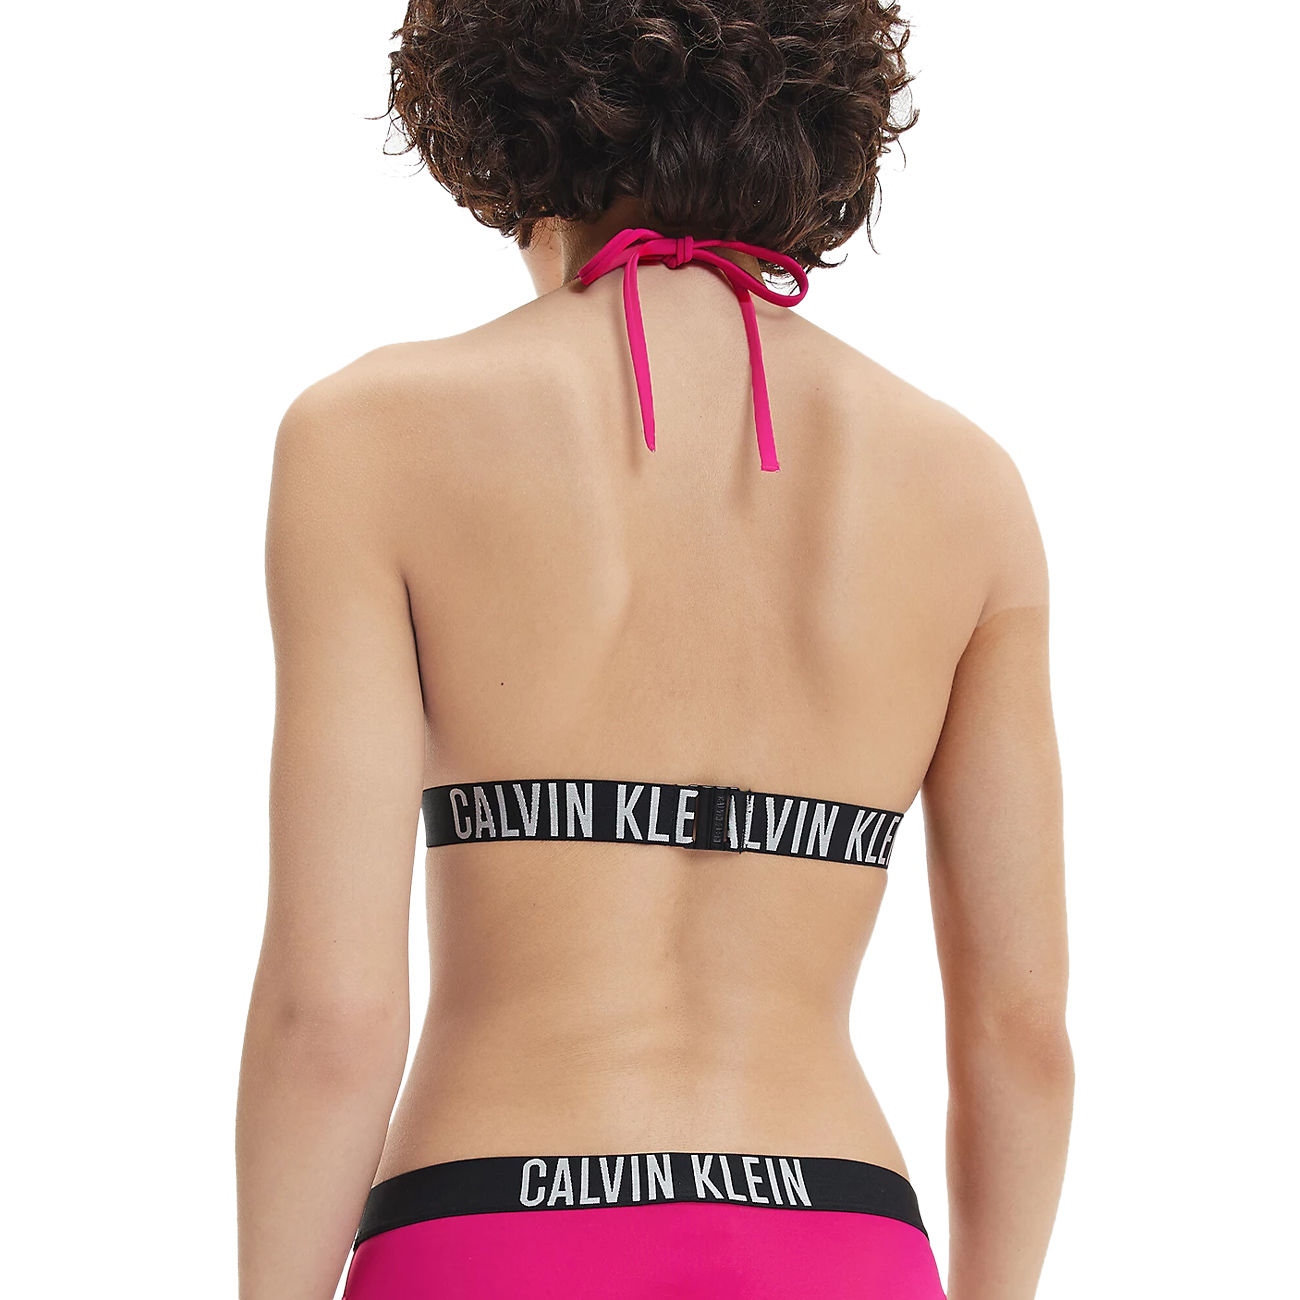 Calvin Klein one shoulder monogram bikini top in white